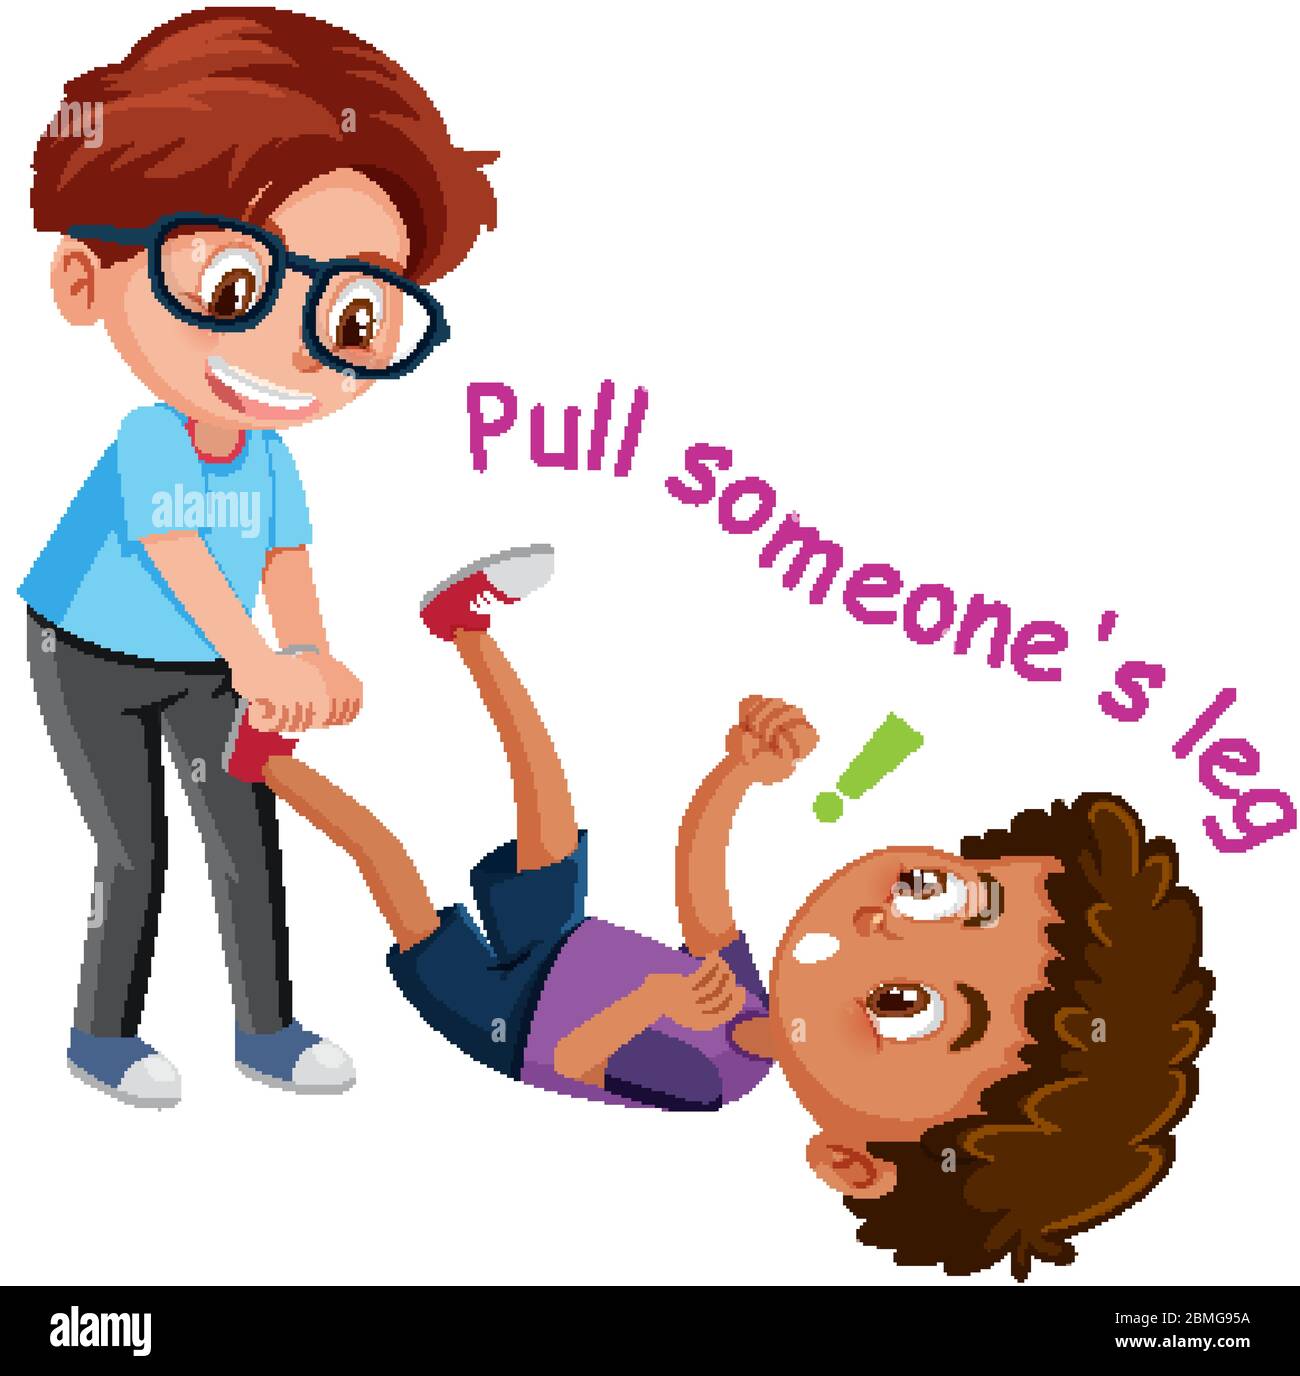 Pull someone s leg